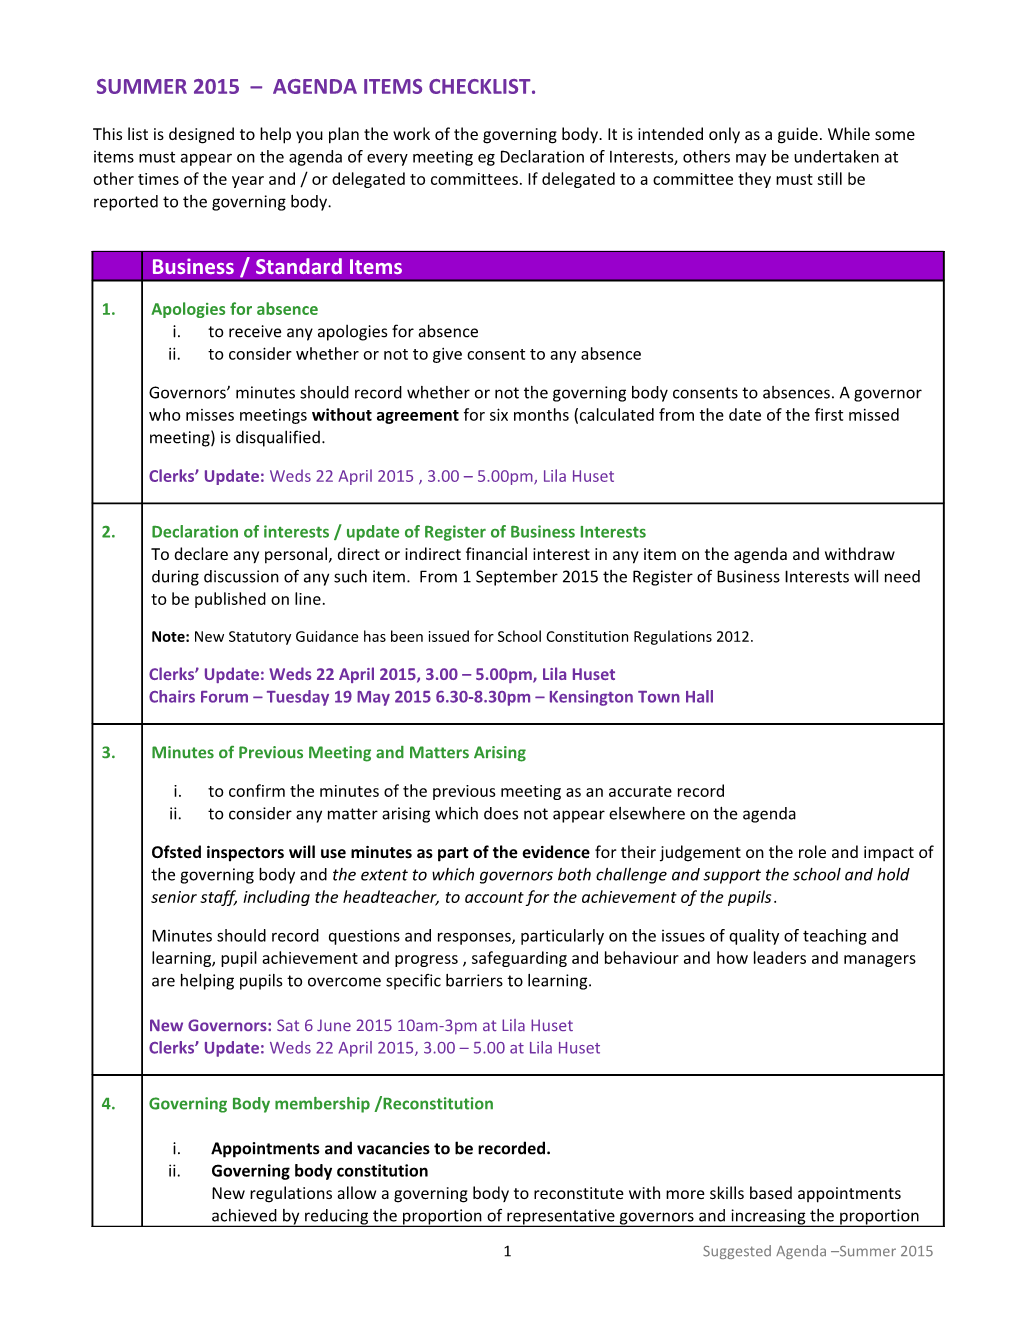 Summer 2015 Agenda Items Checklist